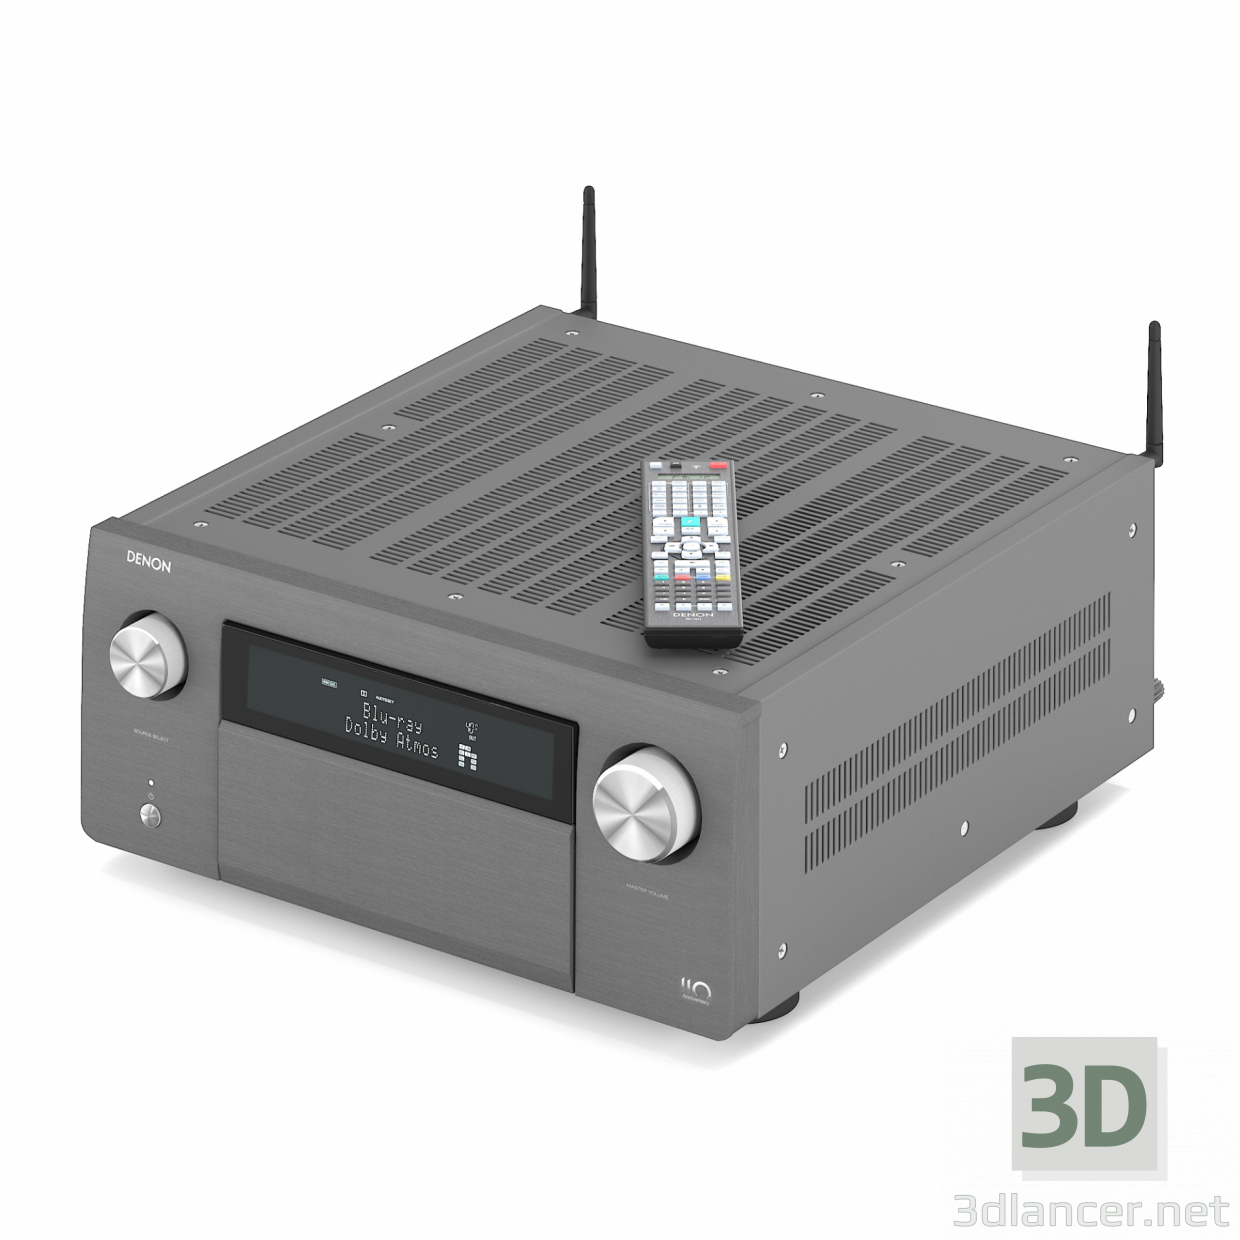 3d Denon AVR A110 model buy - render